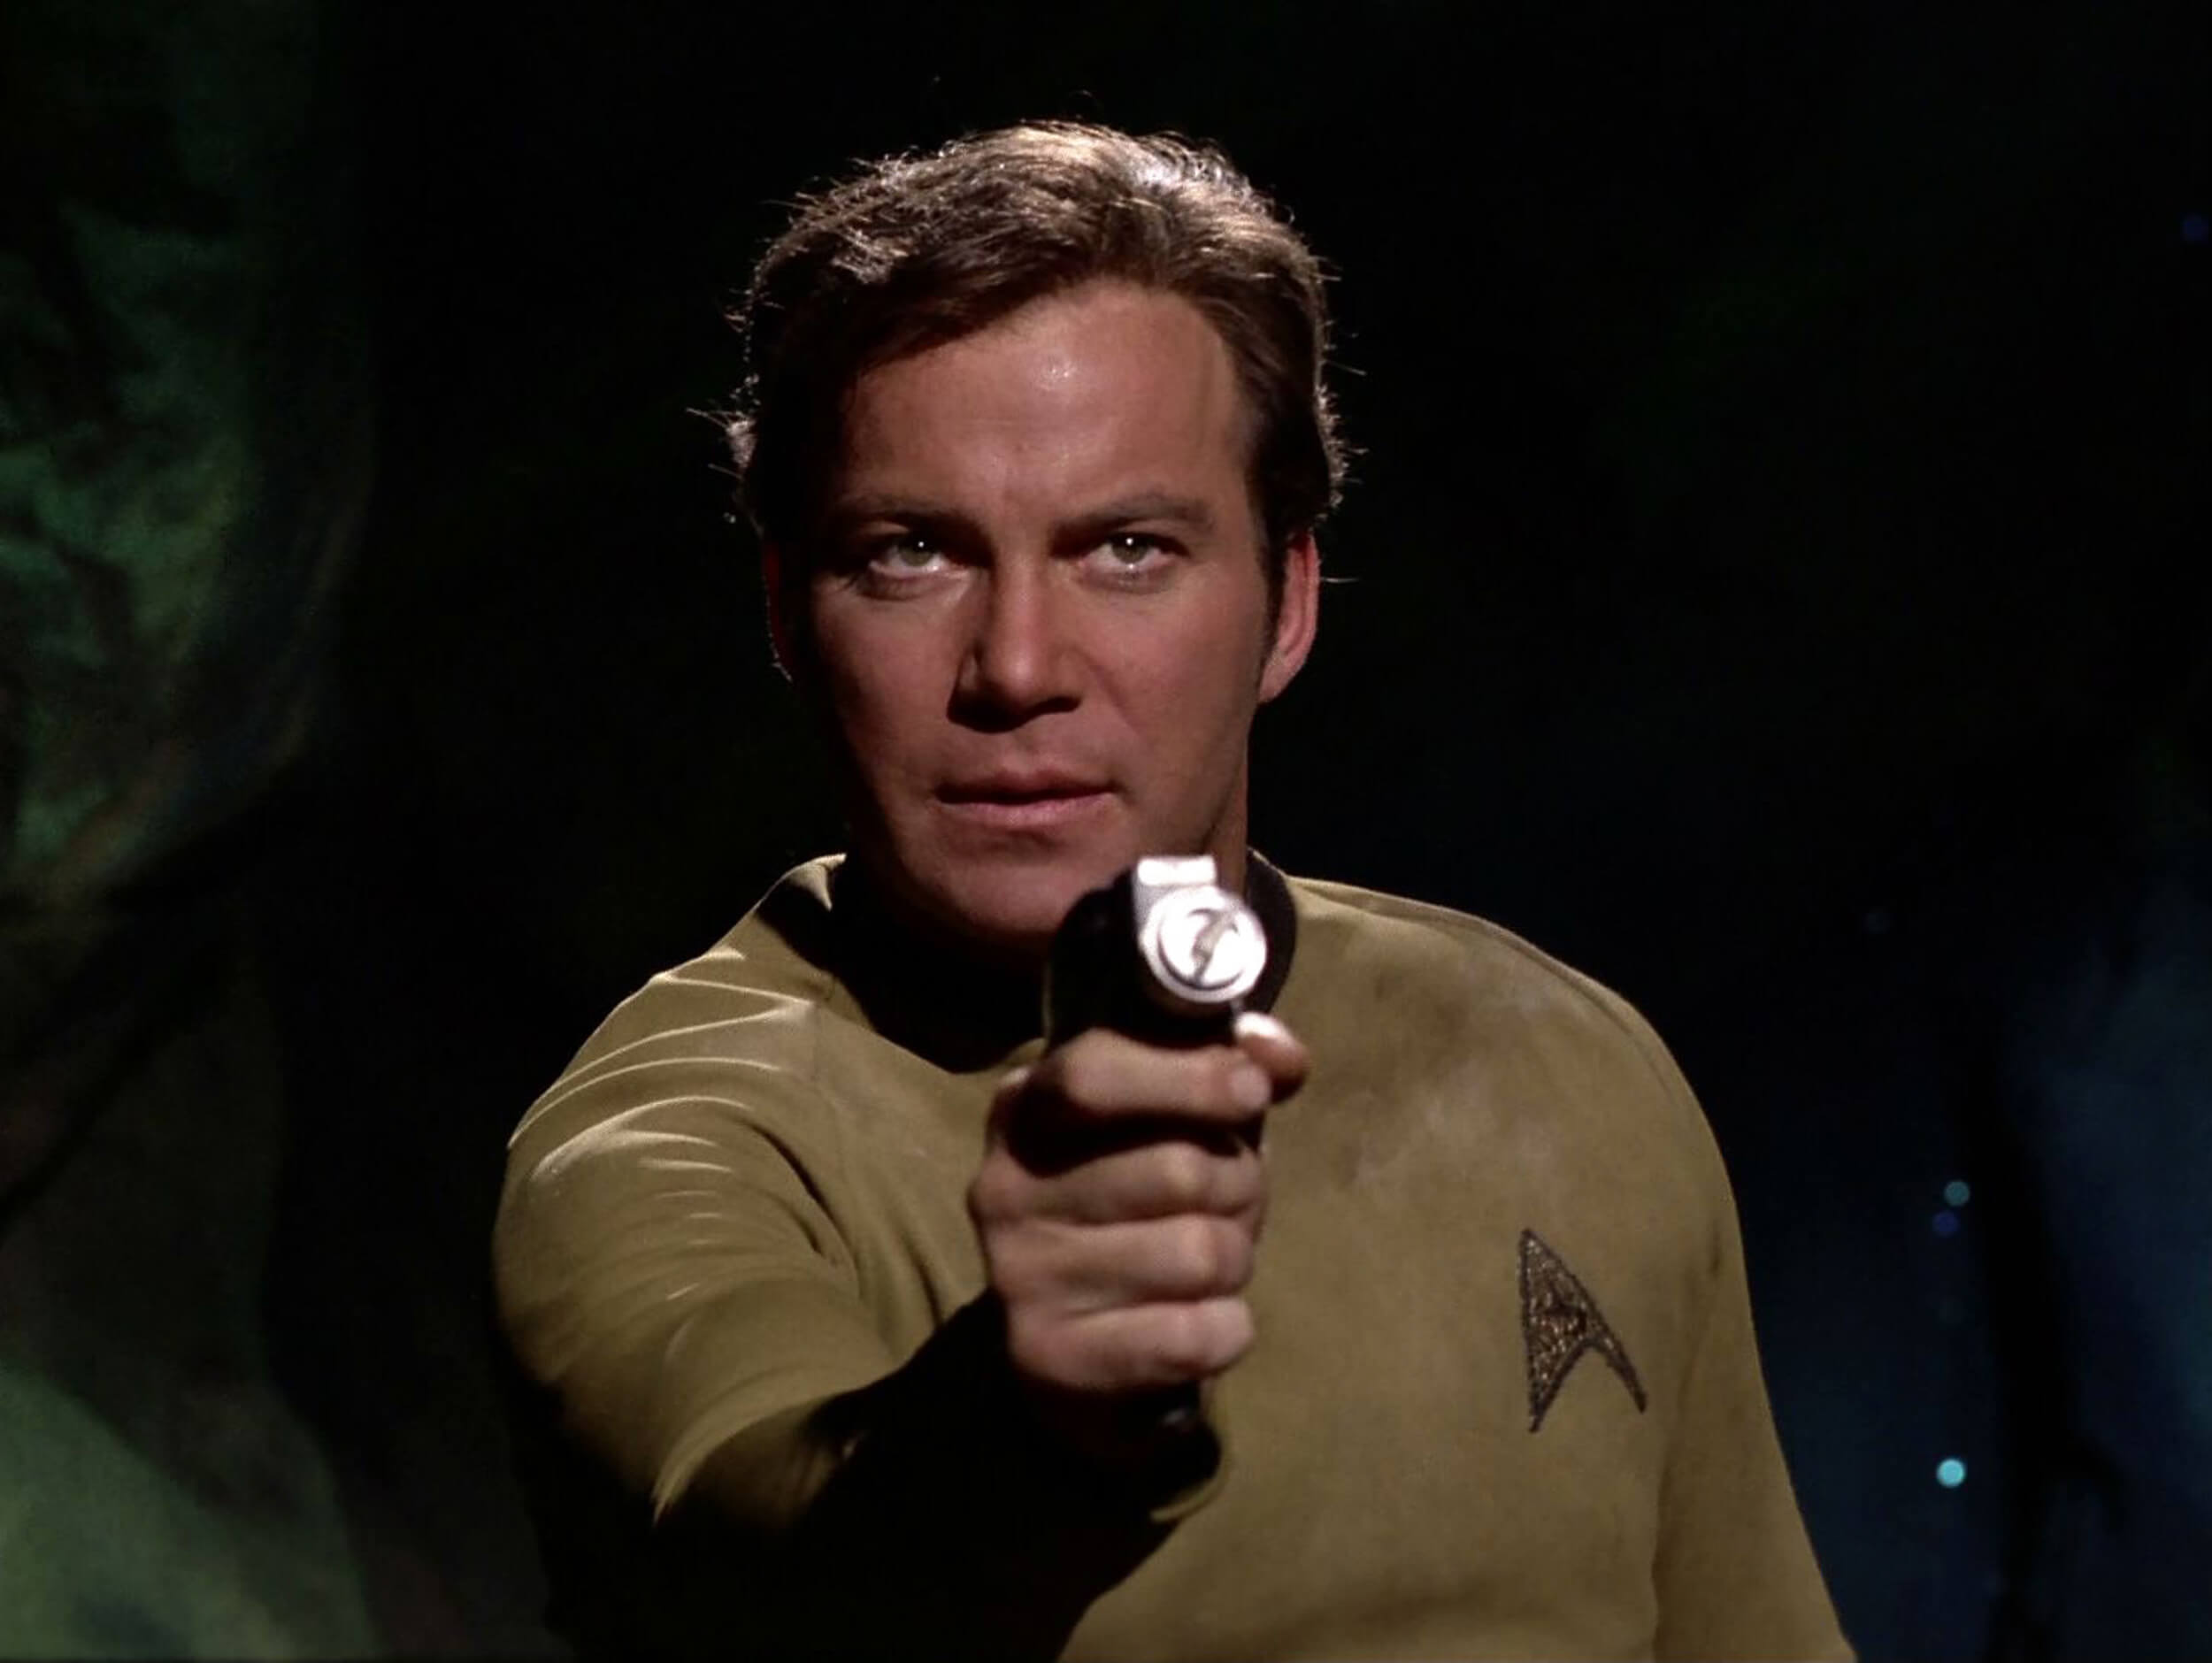 William Shatner as James T. Kirk